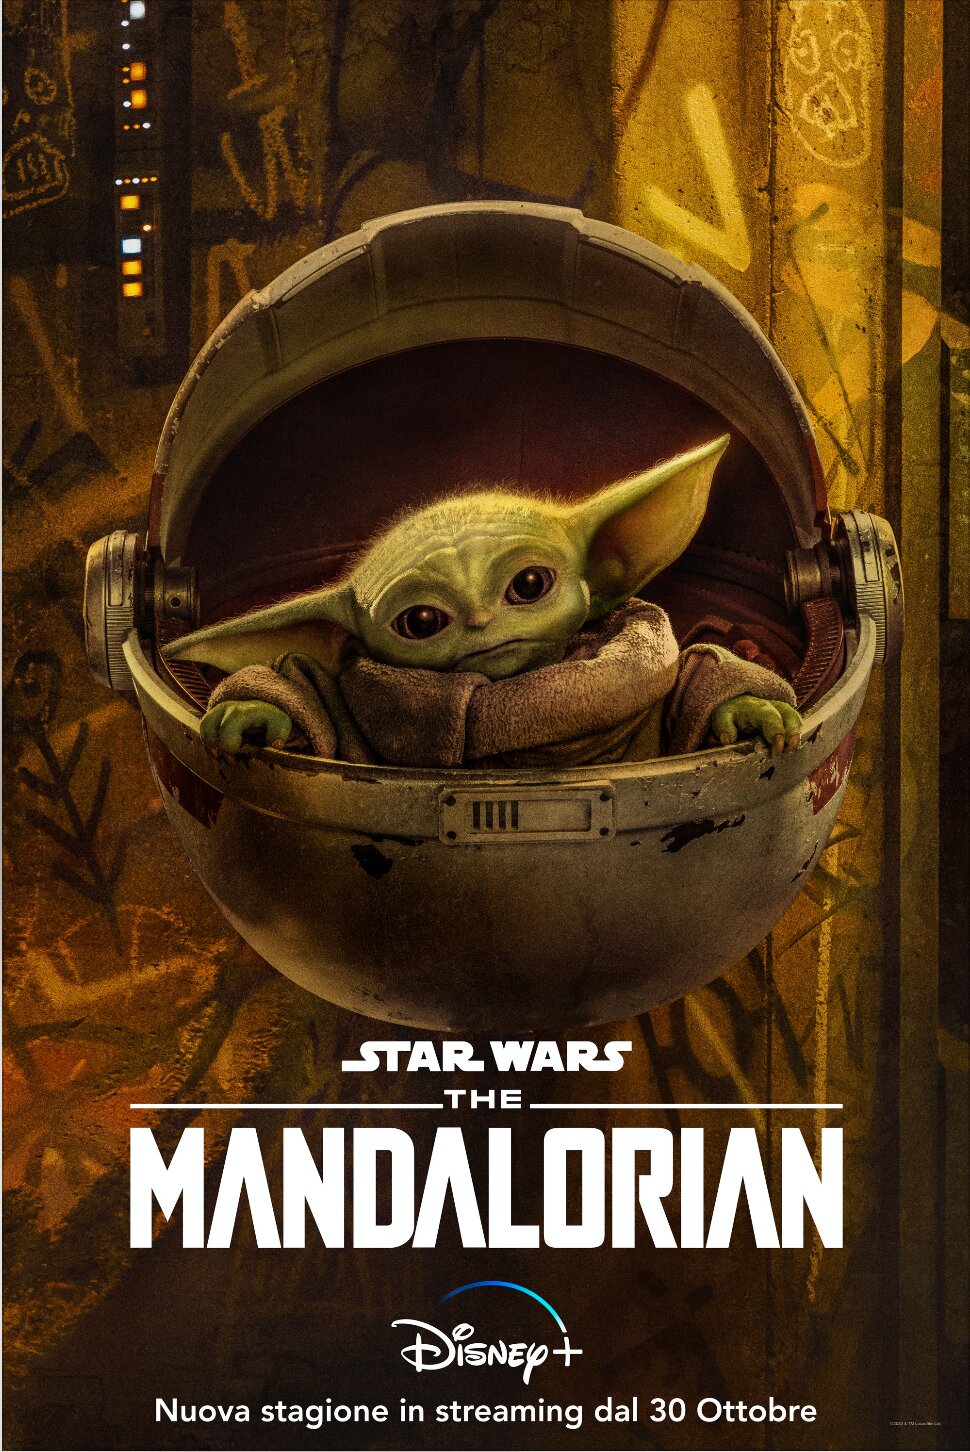 The Mandalorian Poster 2